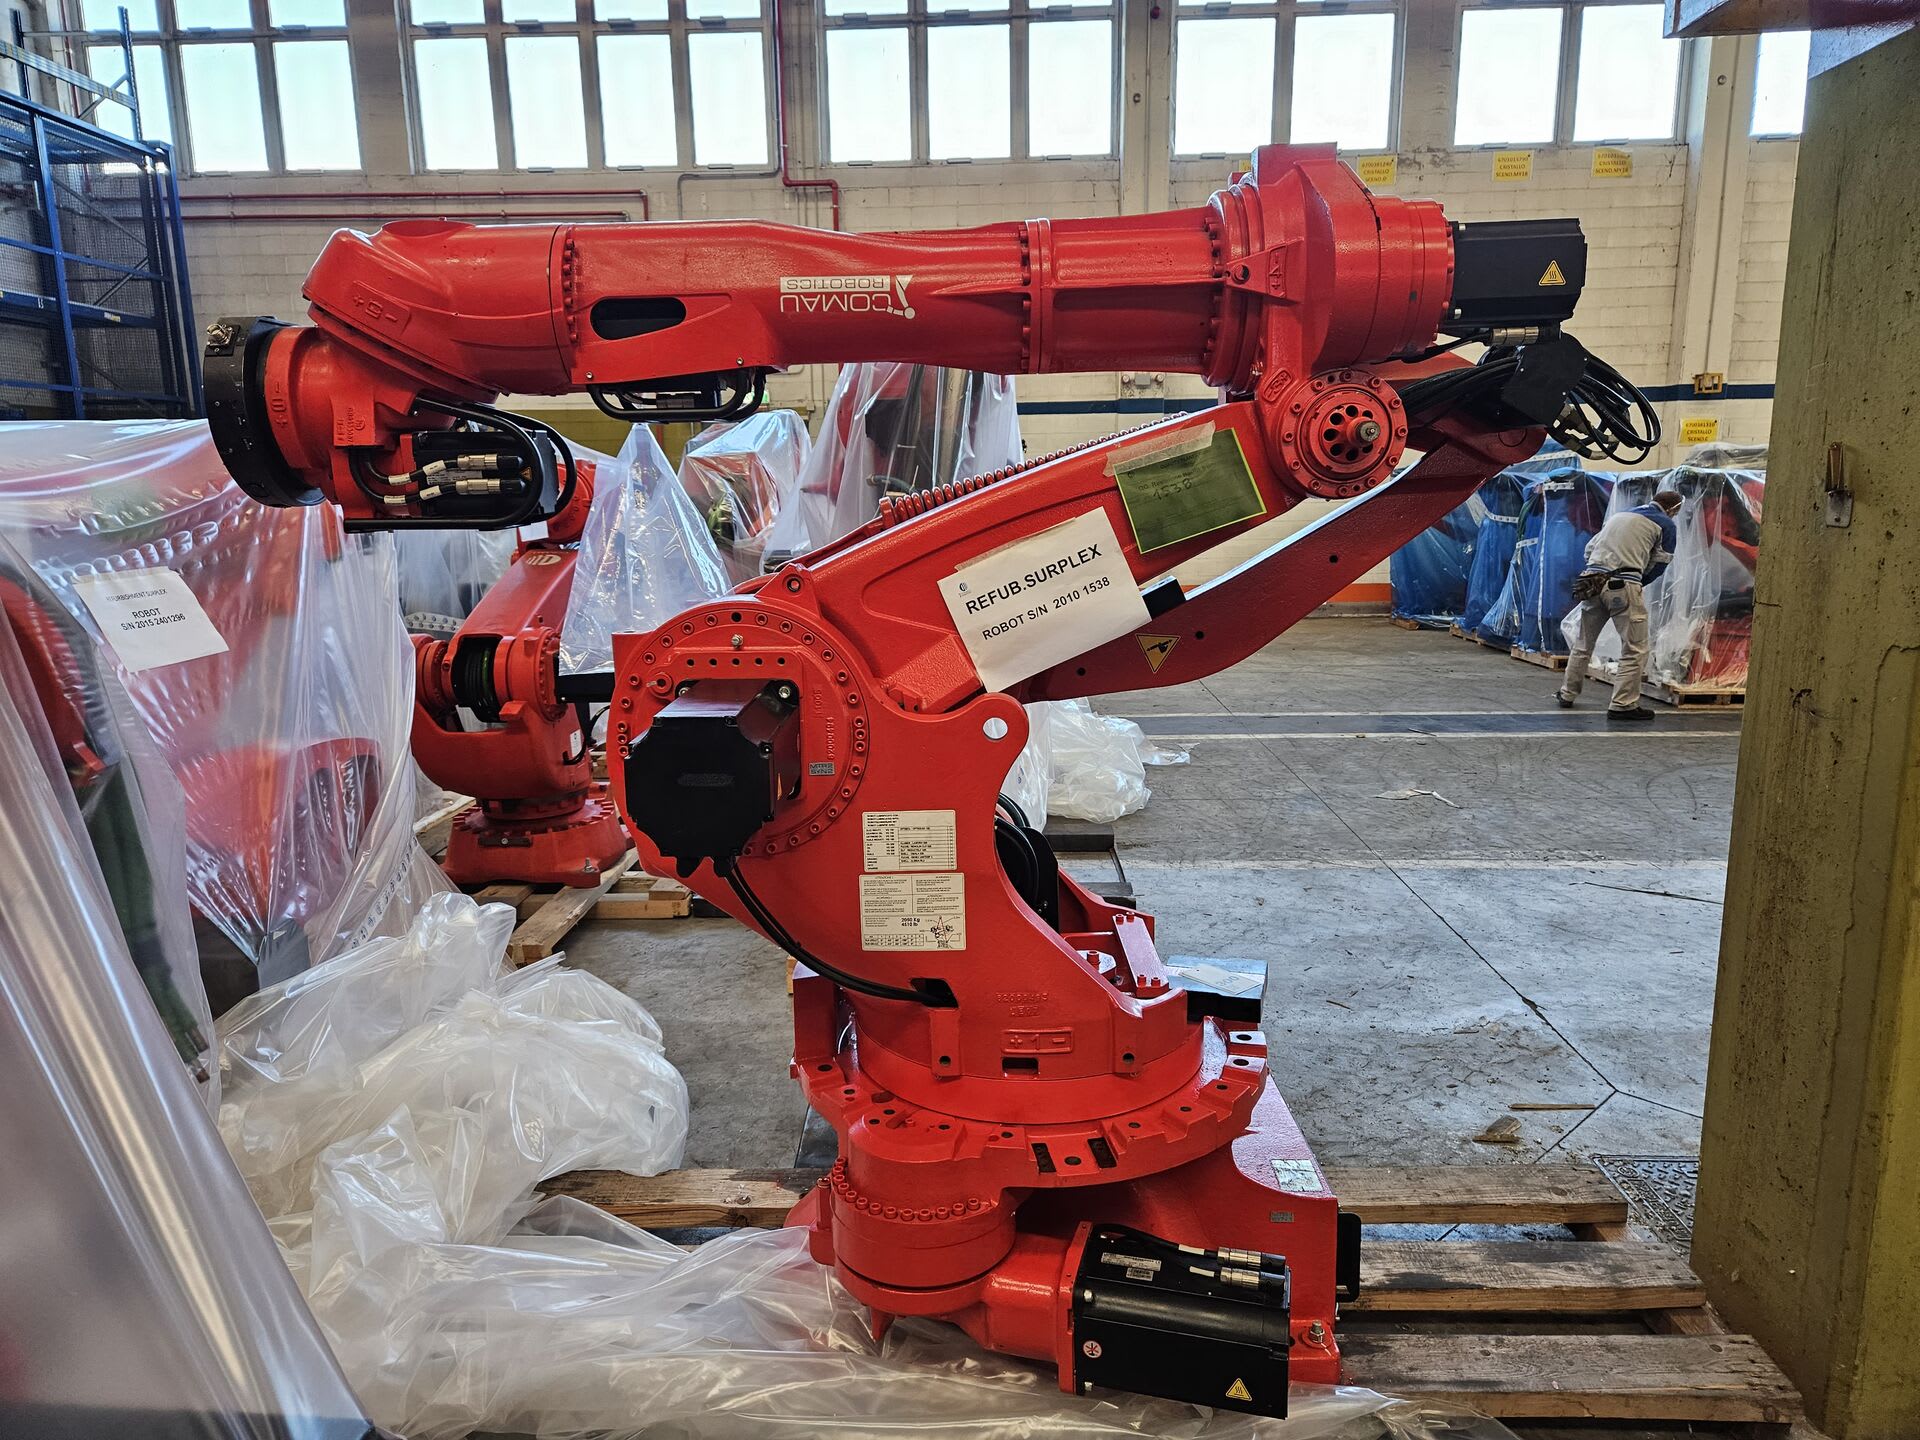 ▷ Robô industrial COMAU SMART5 NJ4 175 - 2.2 Rel. 1.0